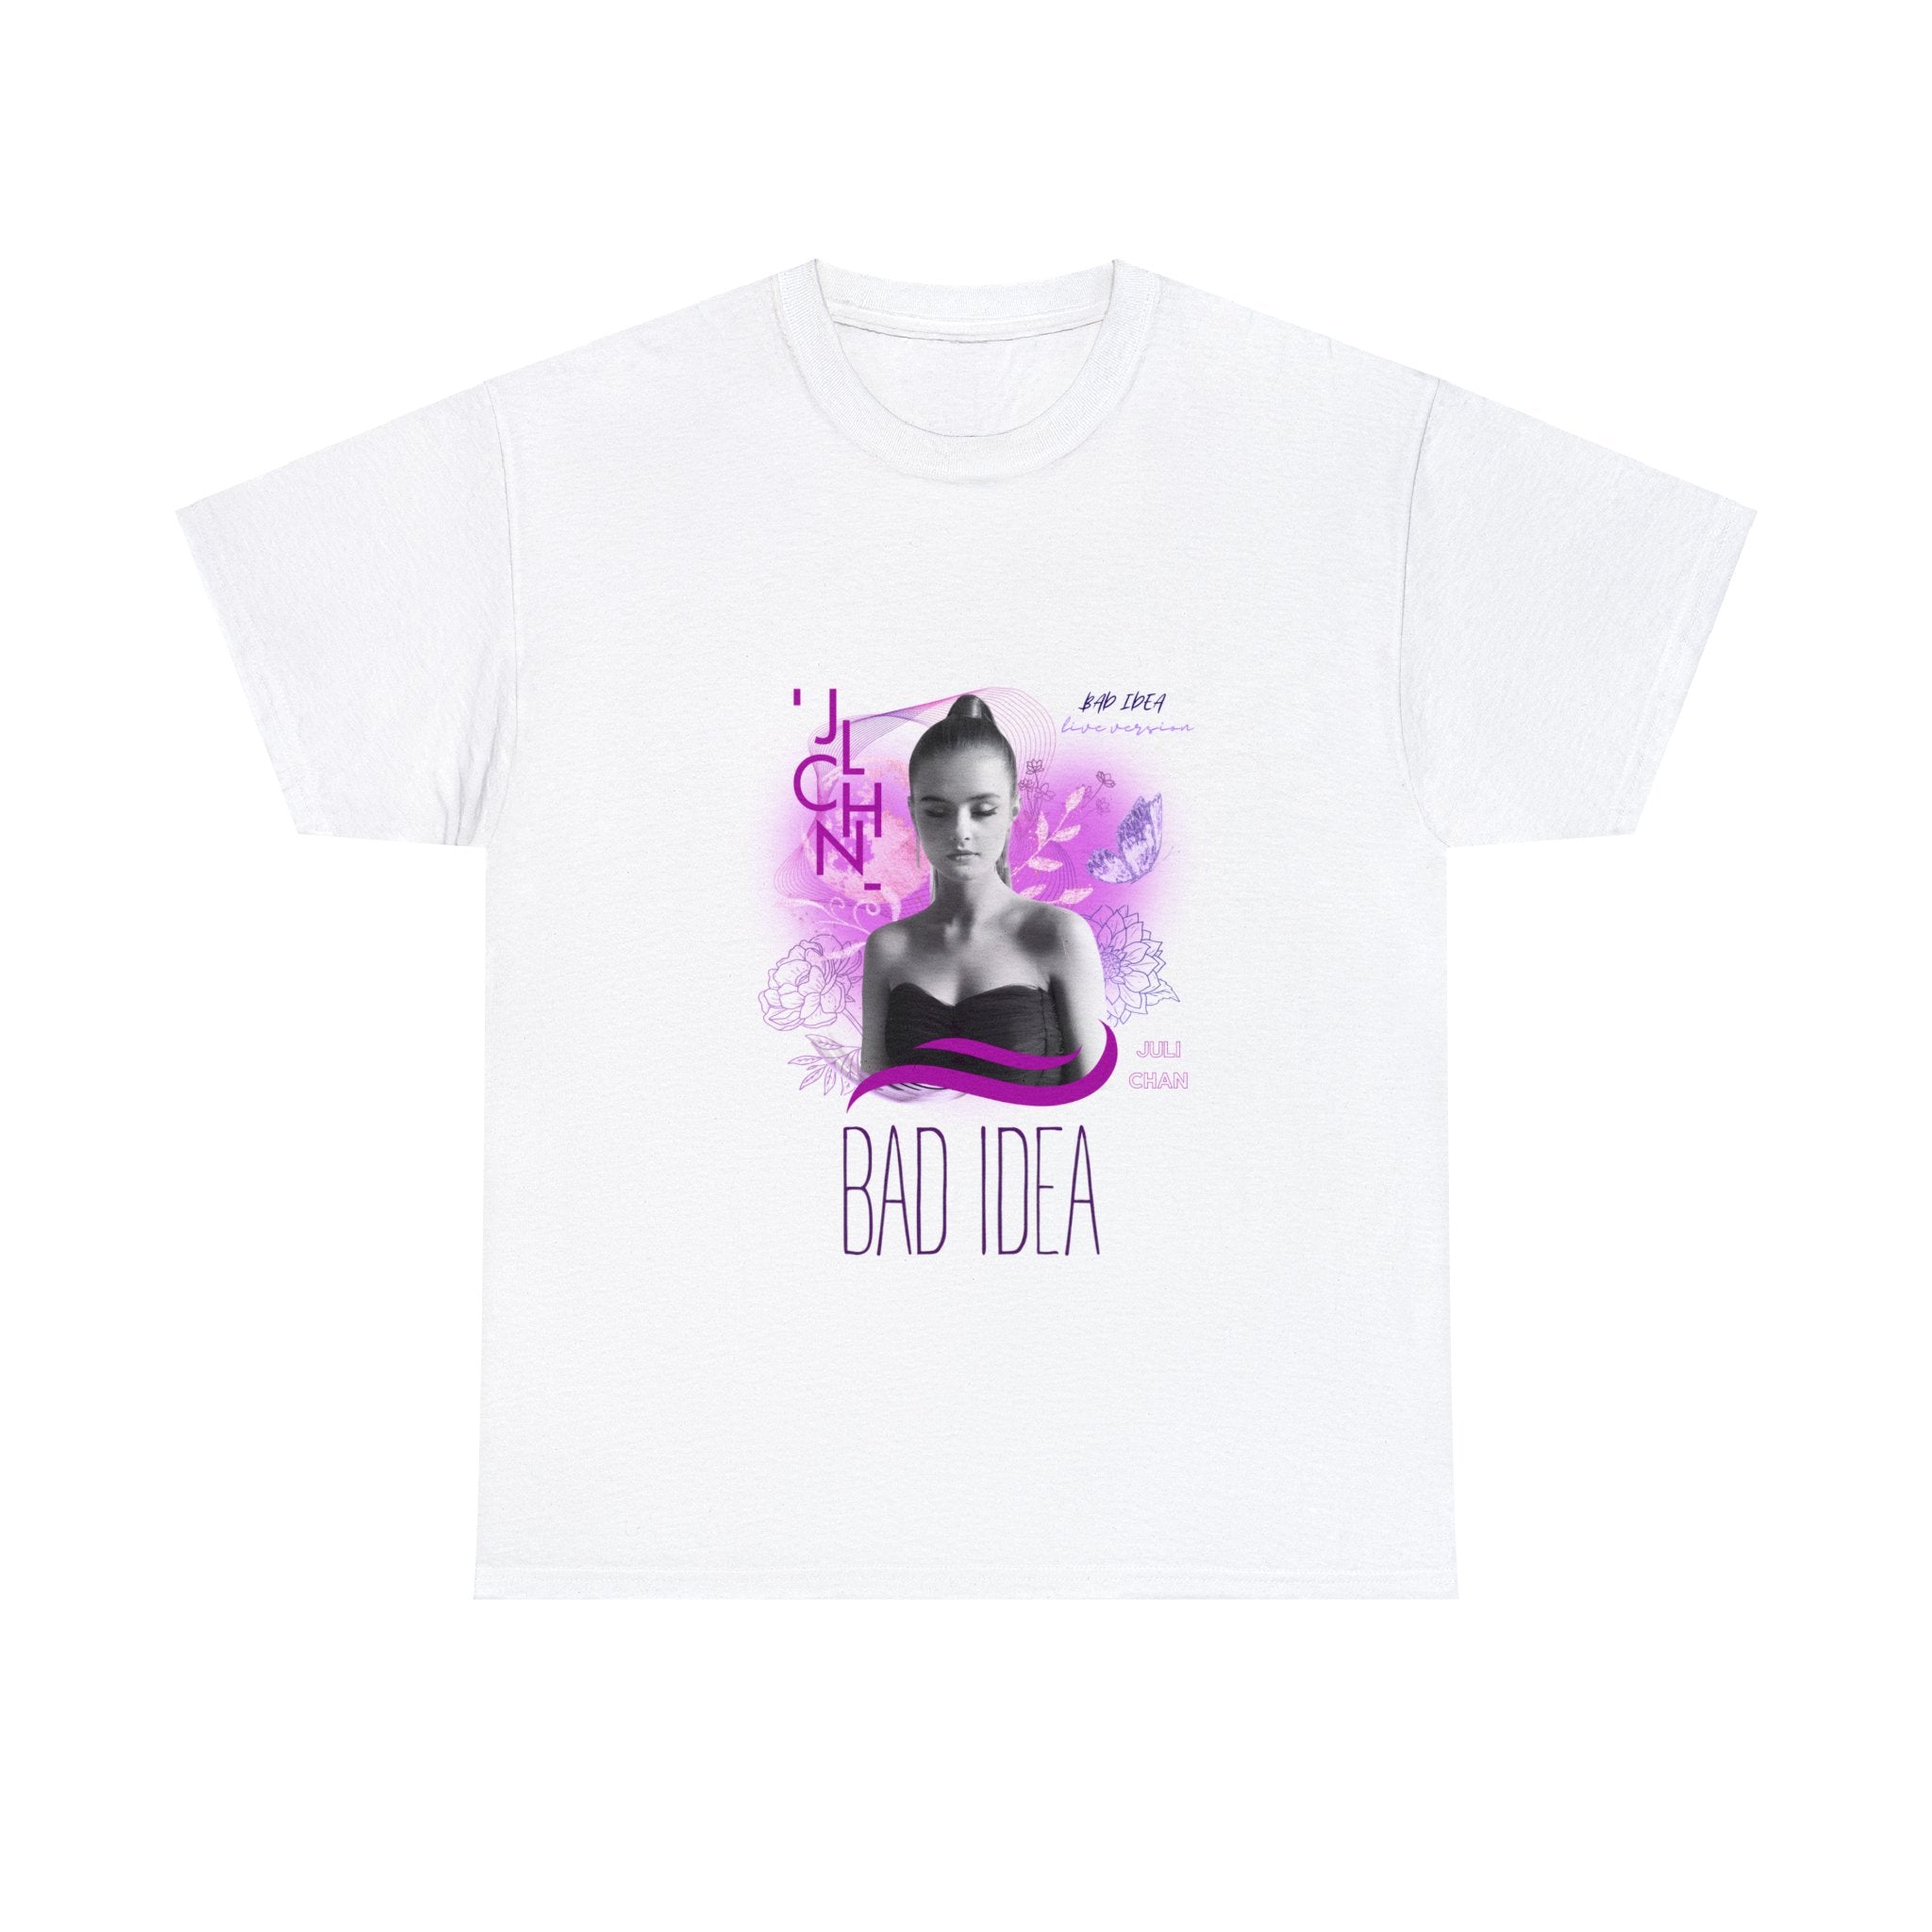 Captivate the Moment: Juli Chan's 'Bad Idea' Cover Art Replica Tee Shirt, A Tribute to 'The Posh Tour'